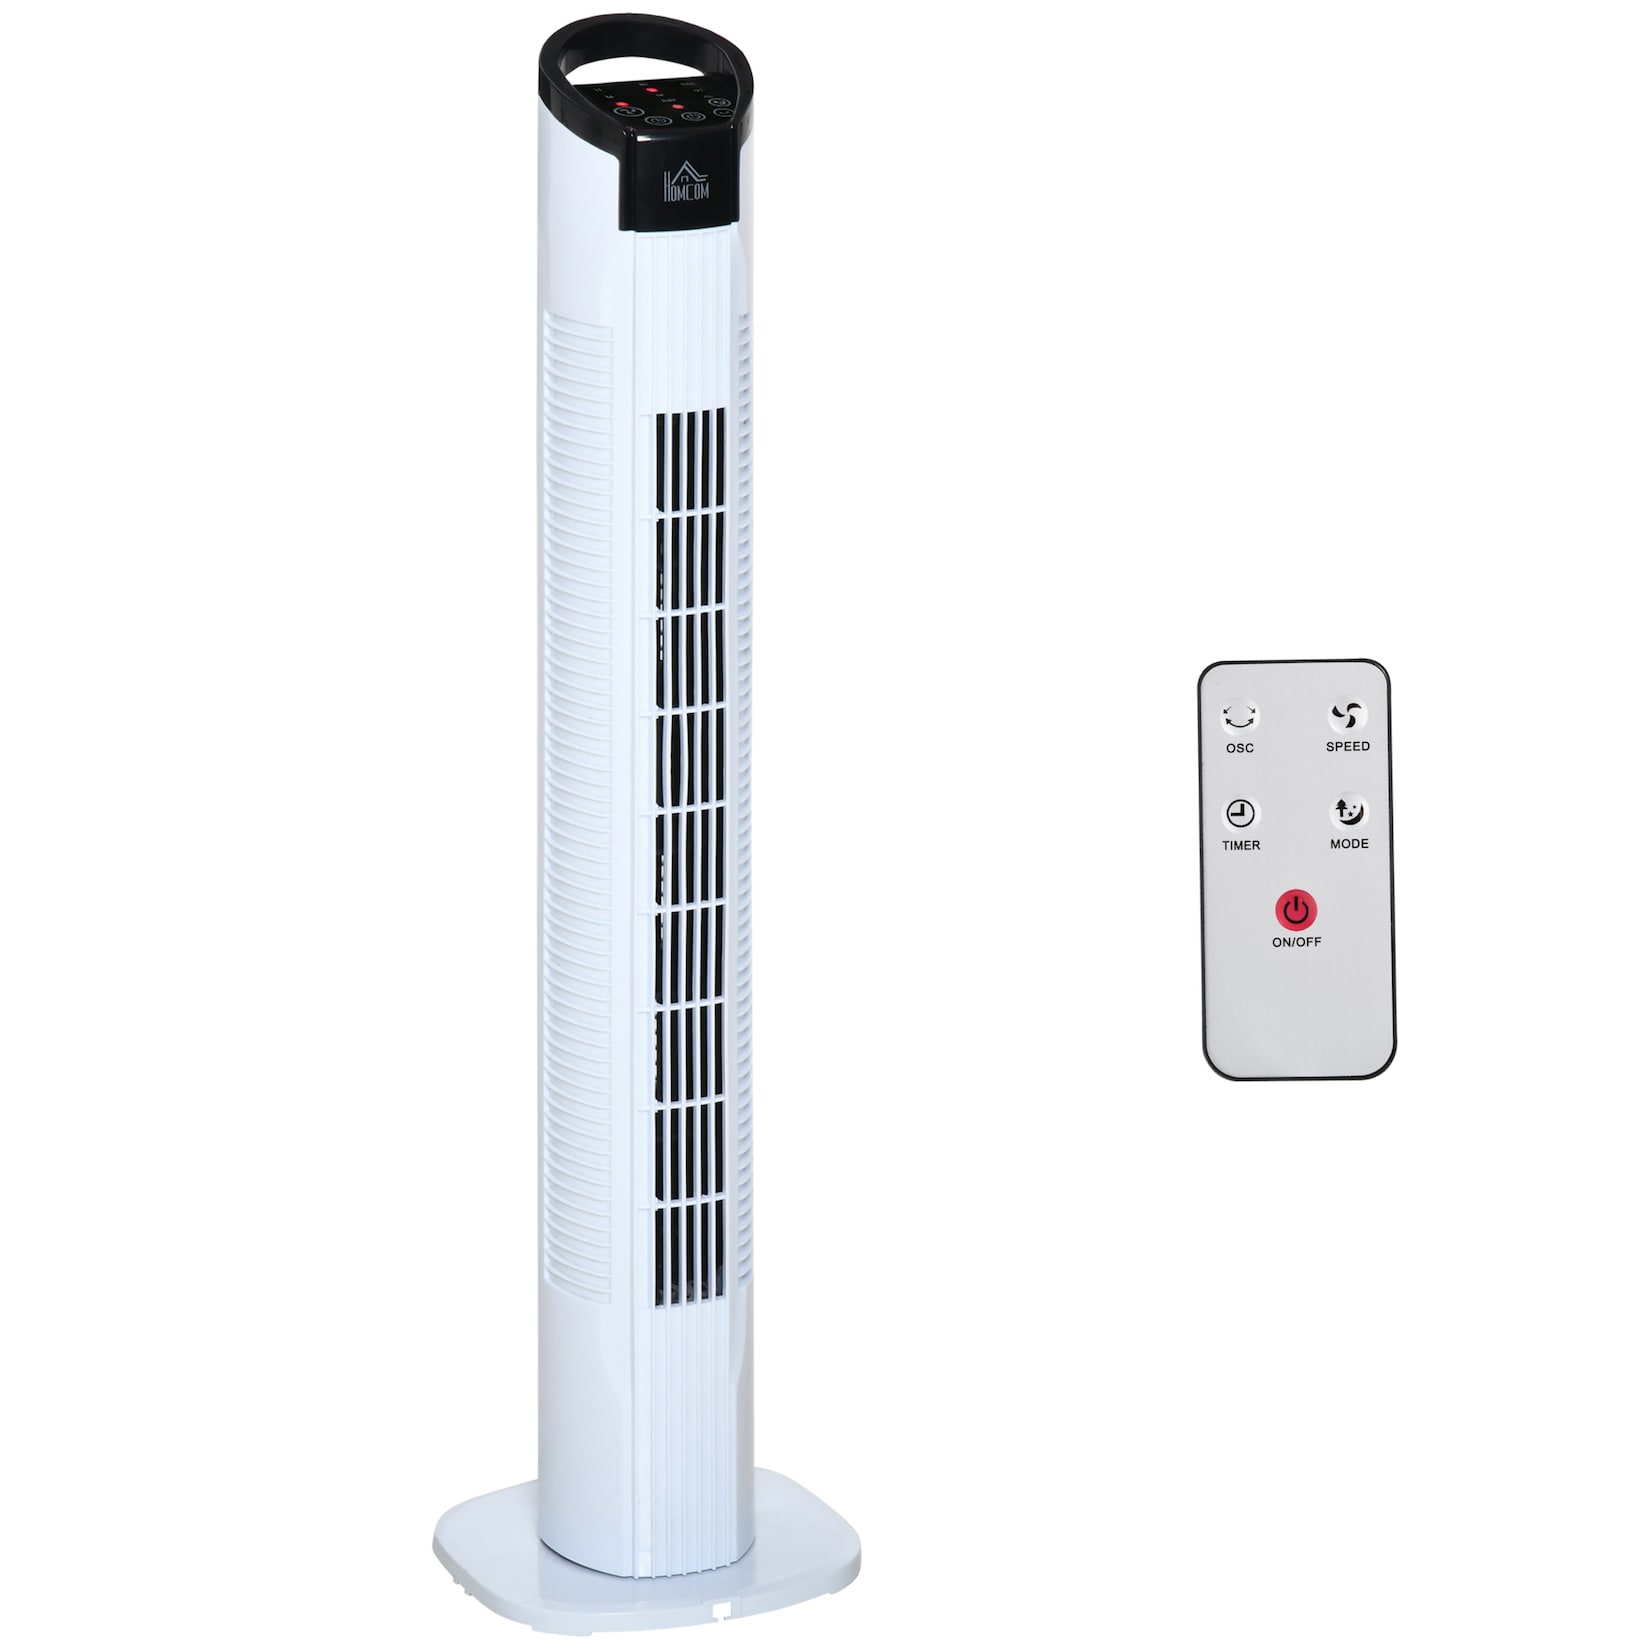 HOMCOM Turmventilator mit Fernbedienung weiß 20L x 20B x 78,5H cm ventilator 3 modi freistehend fernbedienung